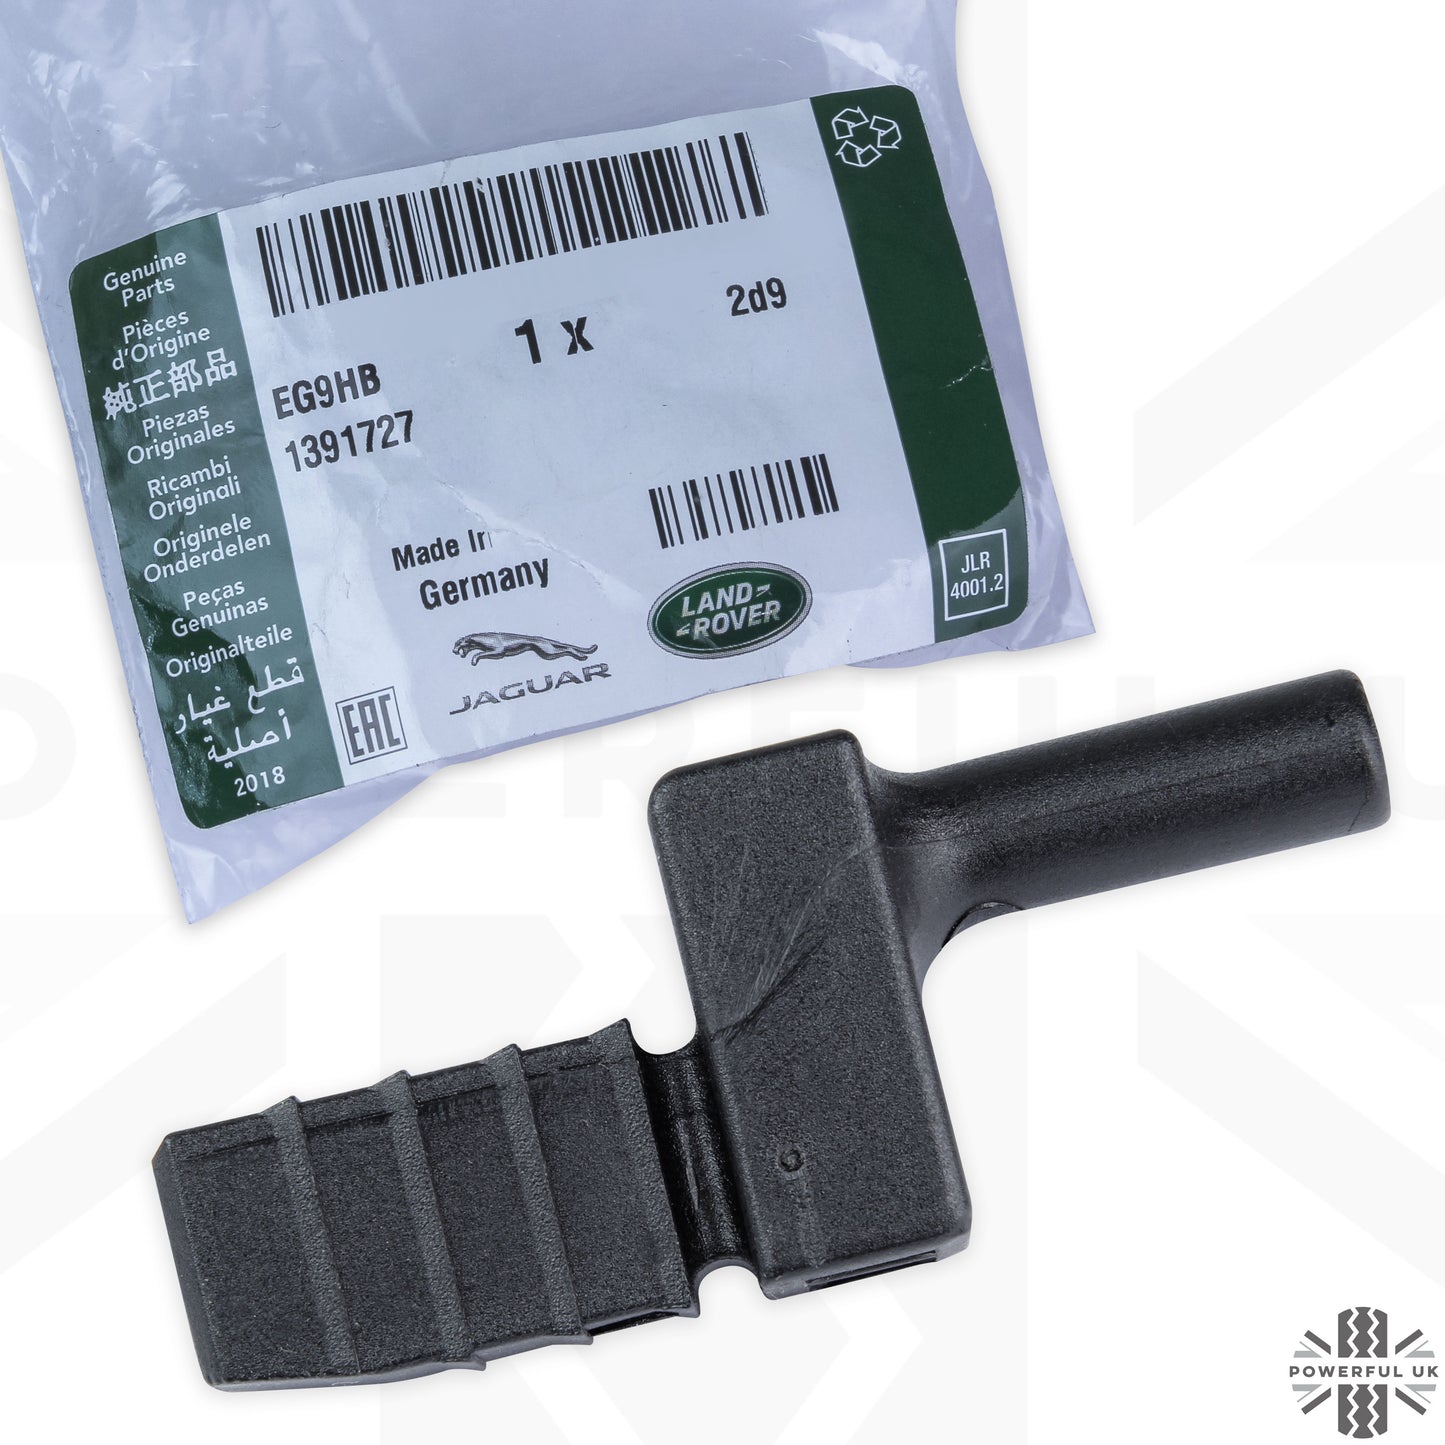 Parcel Shelf Repair Pin for Range Rover L322 - SHORT Type - Single